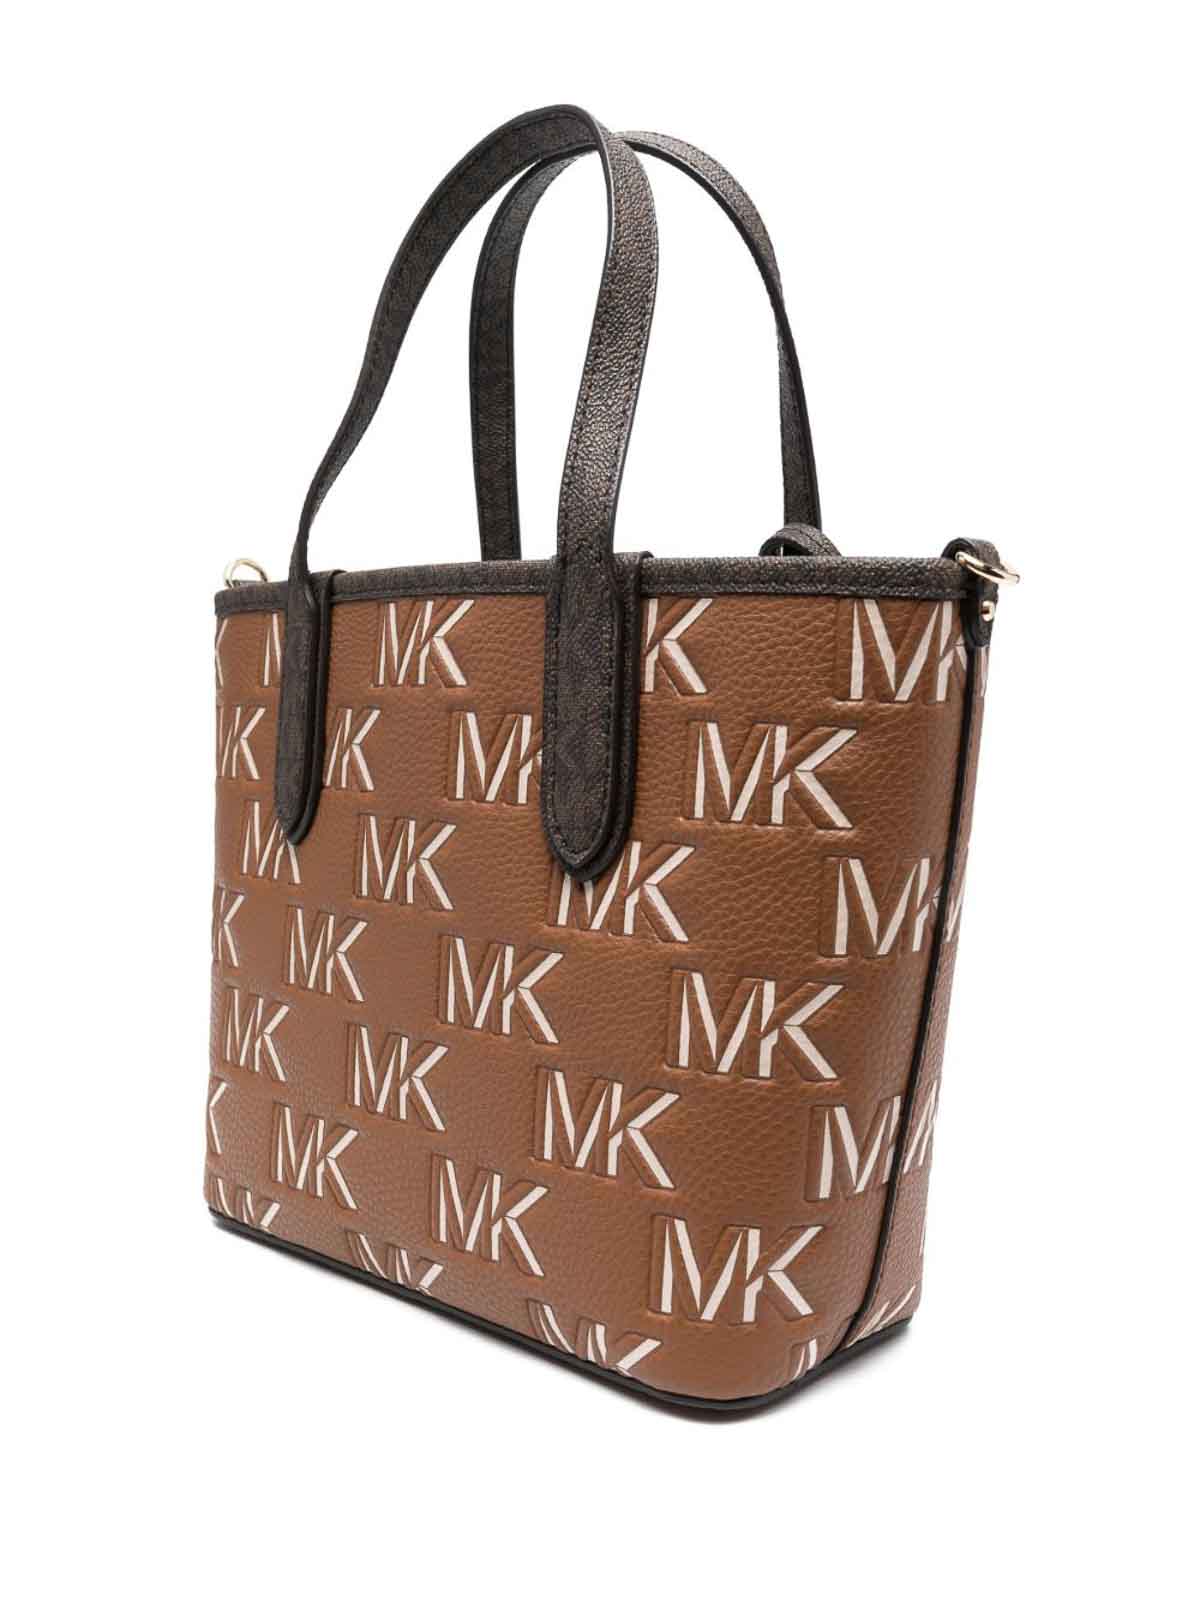 Mk bag & Louis Vuitton Leather Handbag Retailer